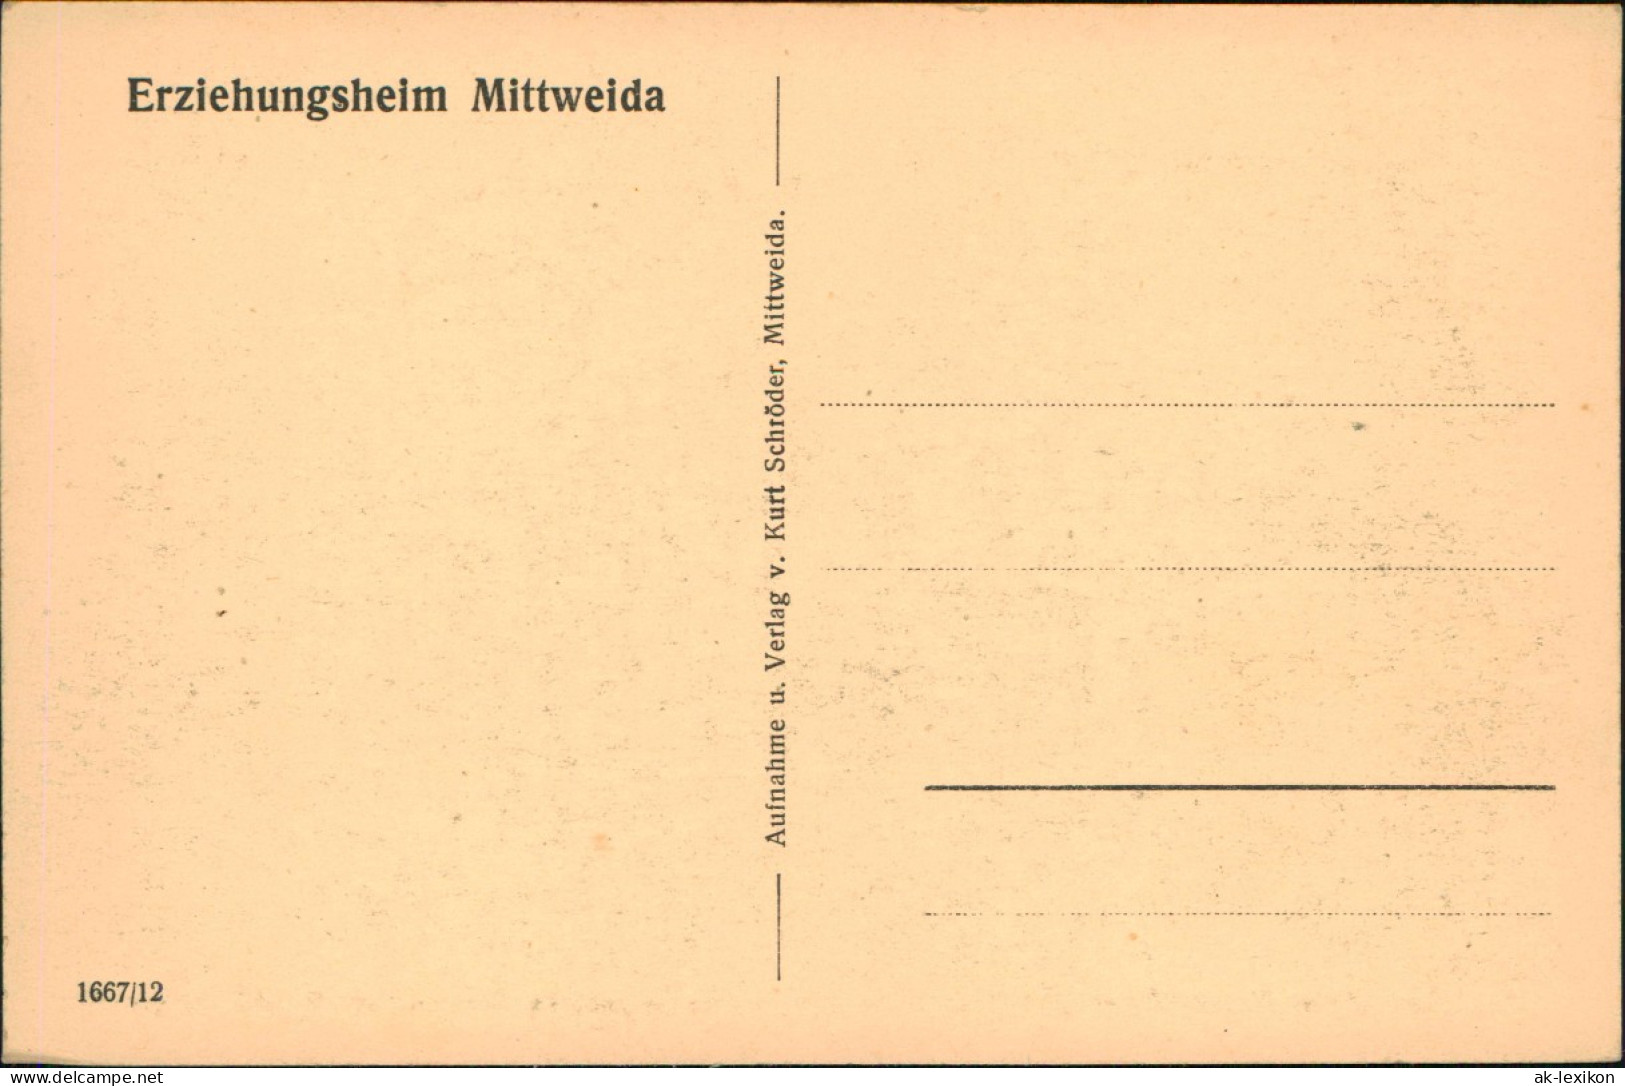 Ansichtskarte Mittweida Erziehungsheim Burgdorffhäuser 1928 - Mittweida